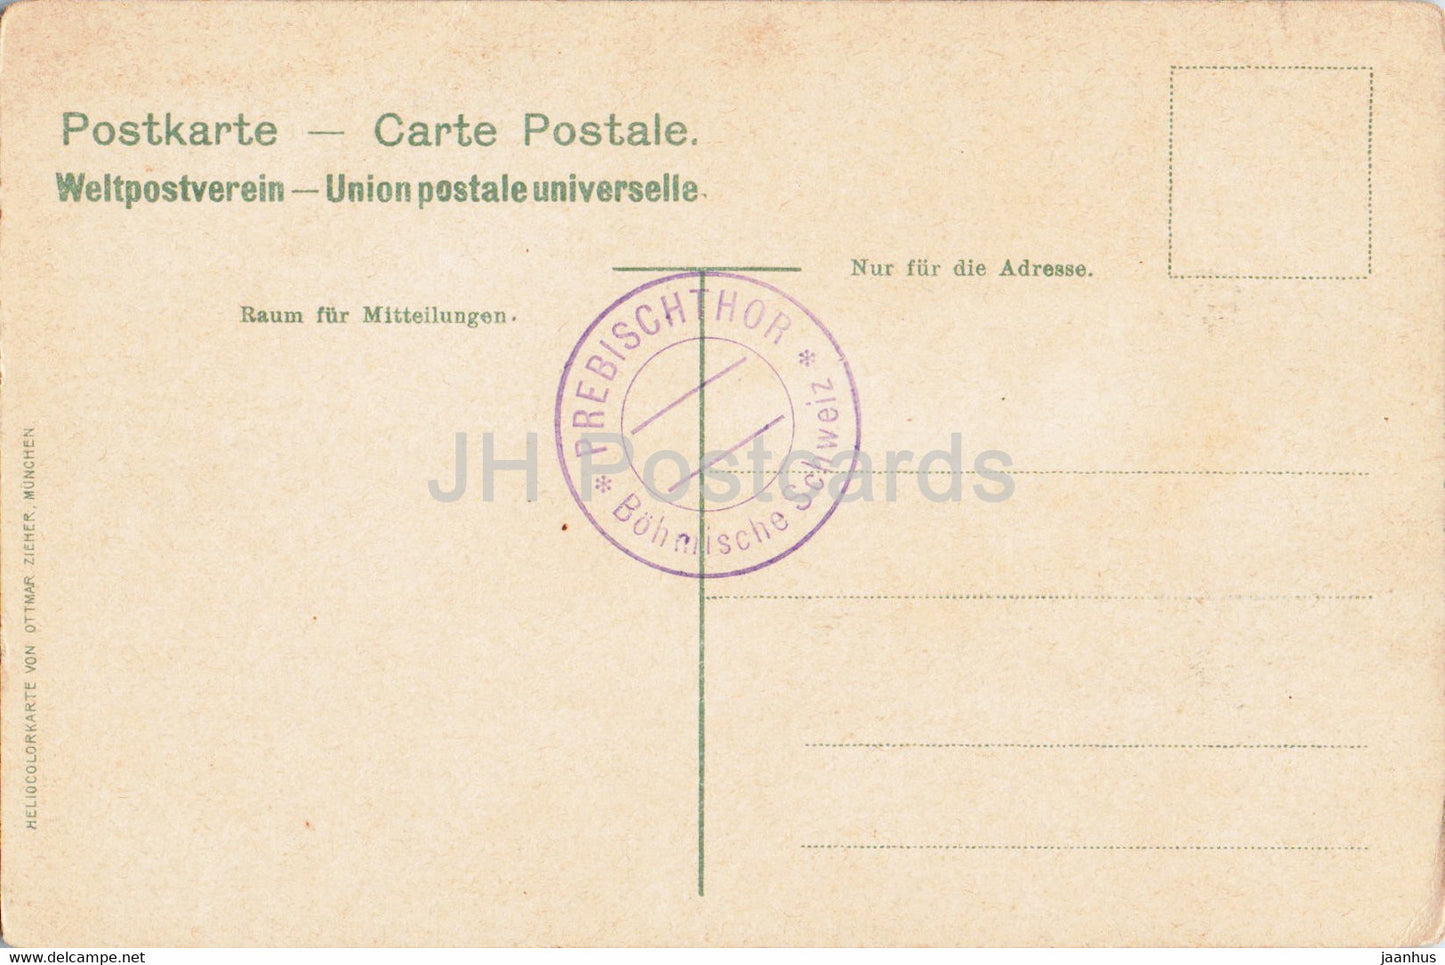 Prebischtor - Bohm Schweiz - old postcard - Czech Republic - unused